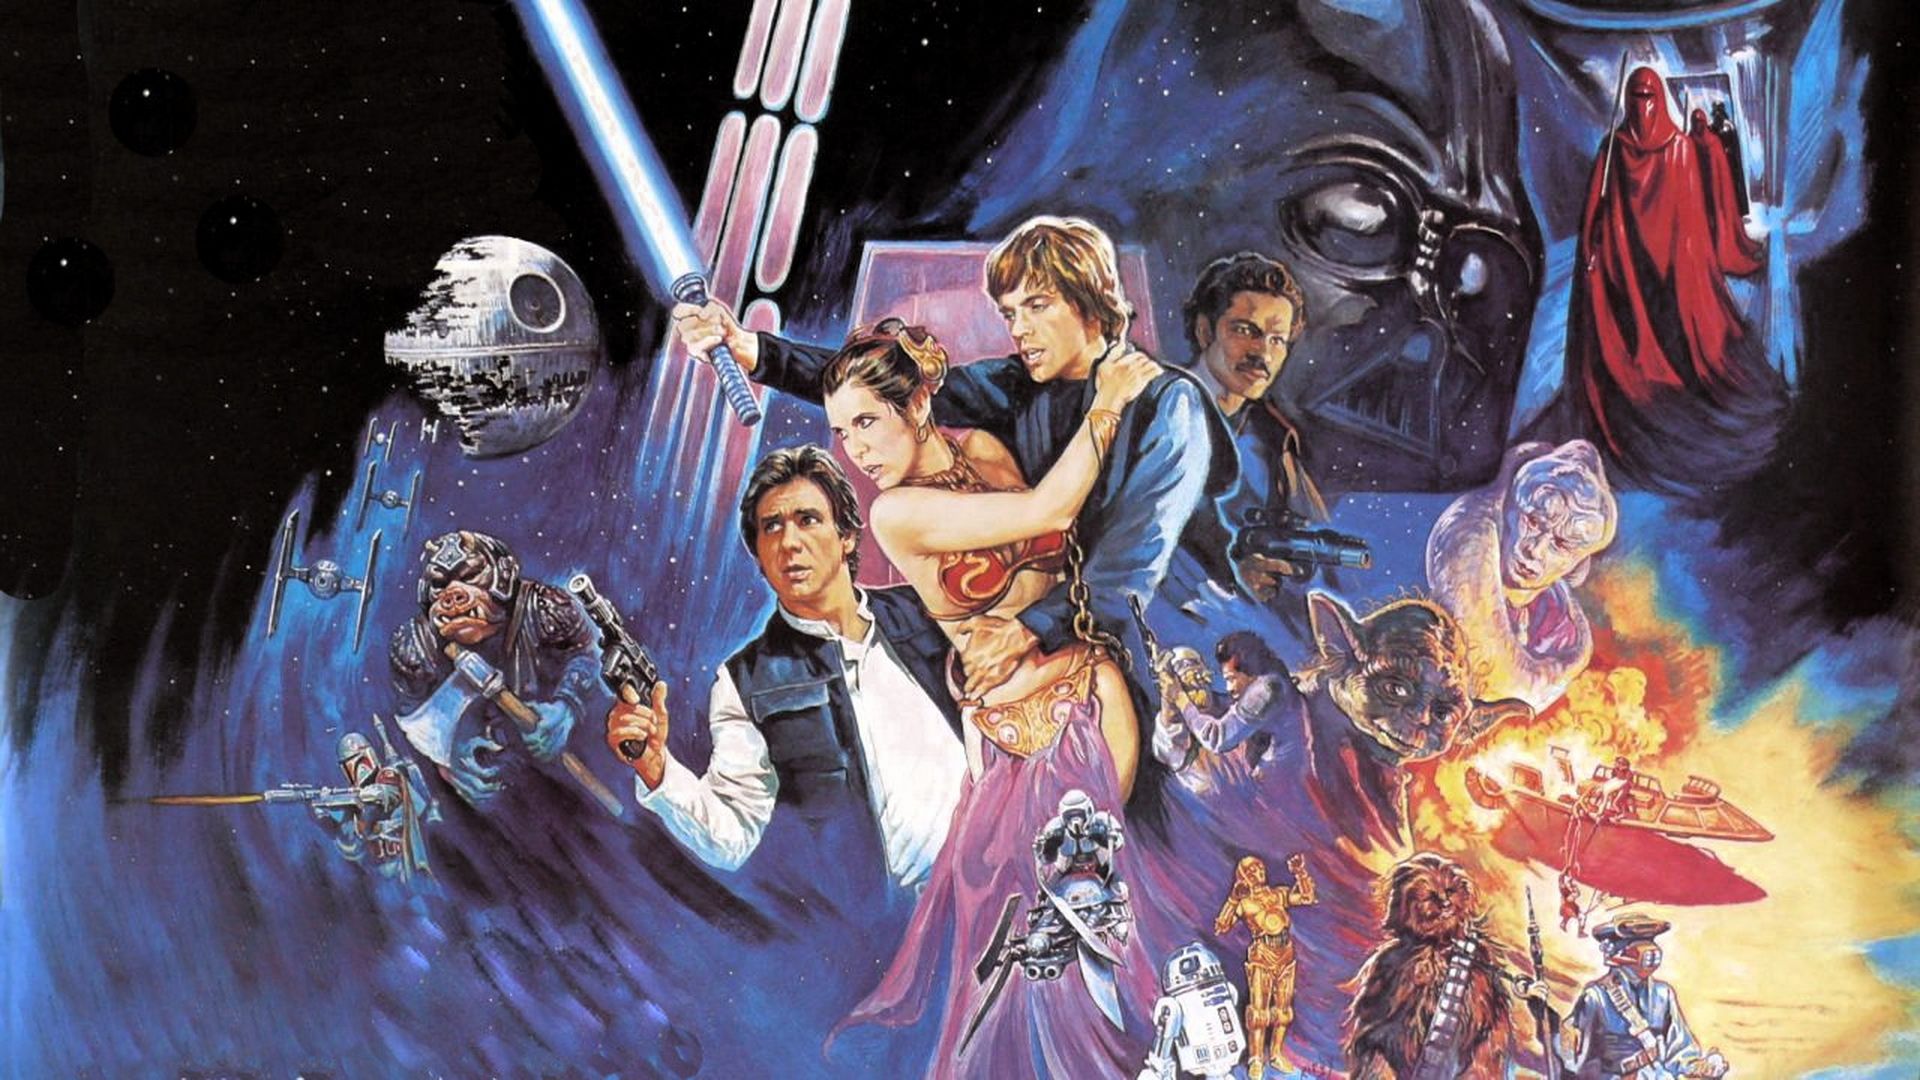 Ranking the Star Wars films Average Fanboy